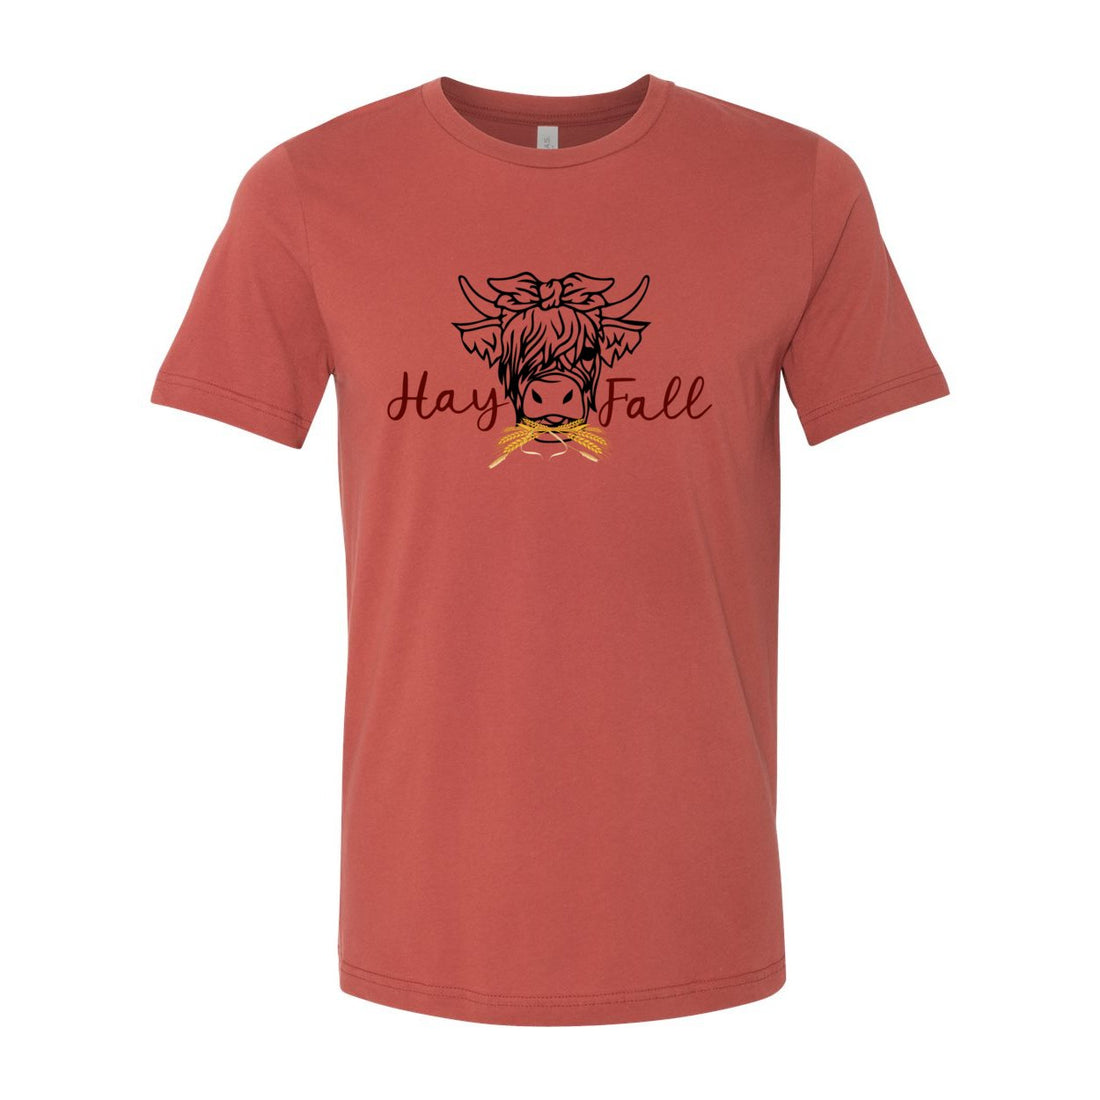 Hay Fall - T-Shirts - Positively Sassy - Hay Fall